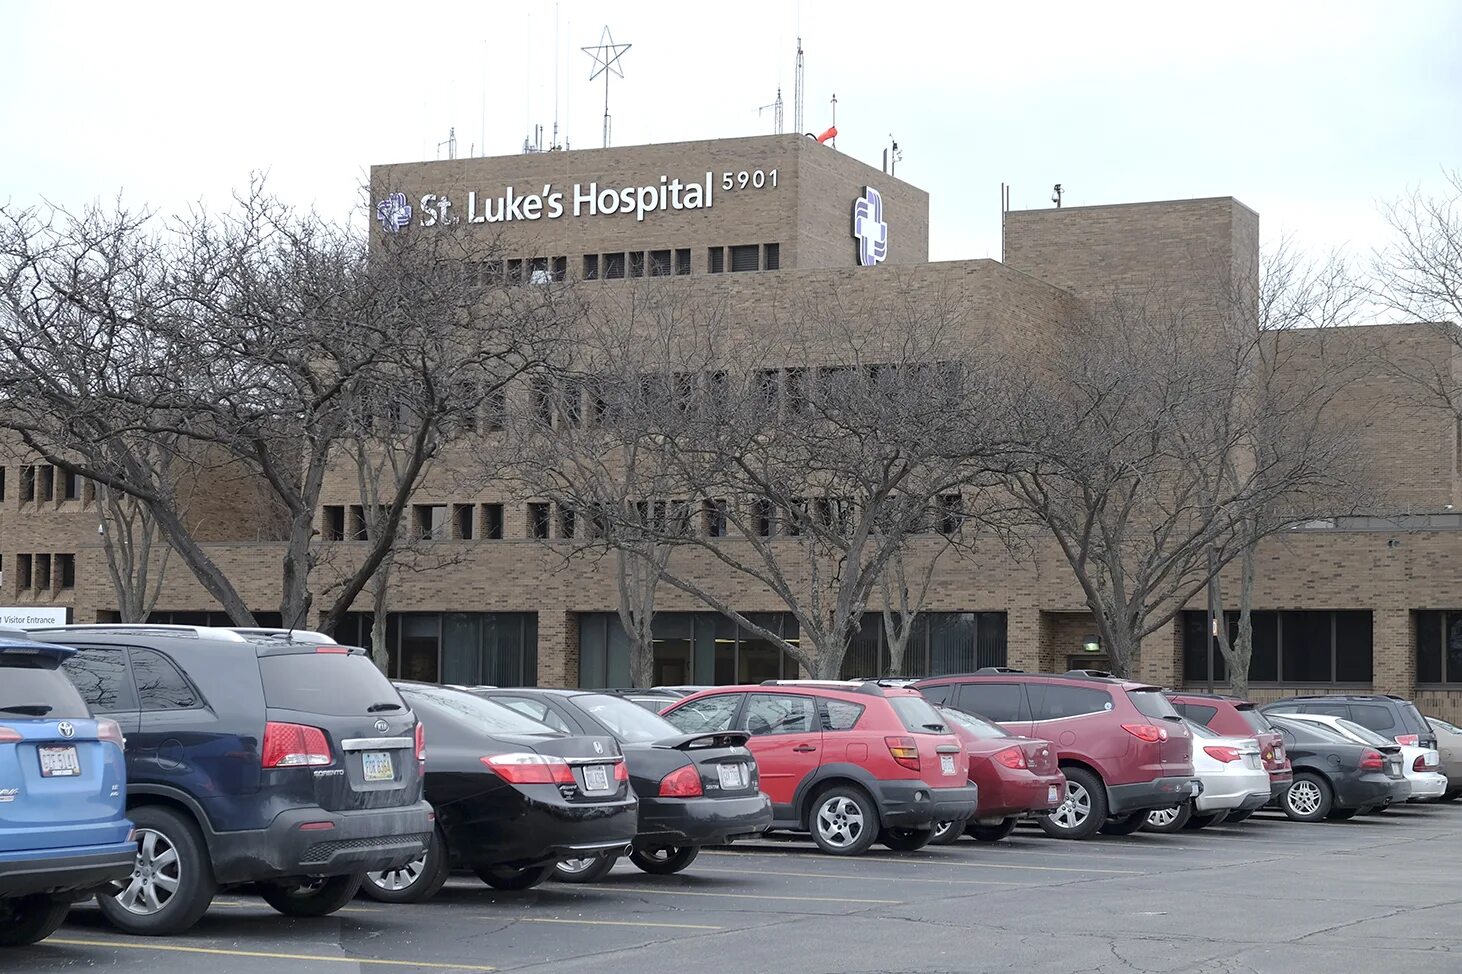 St Luke's Hospital. St Luke Hospital 5901. St Luke's Hospital Греция. St. Luke’s International Hospital. З госпиталь